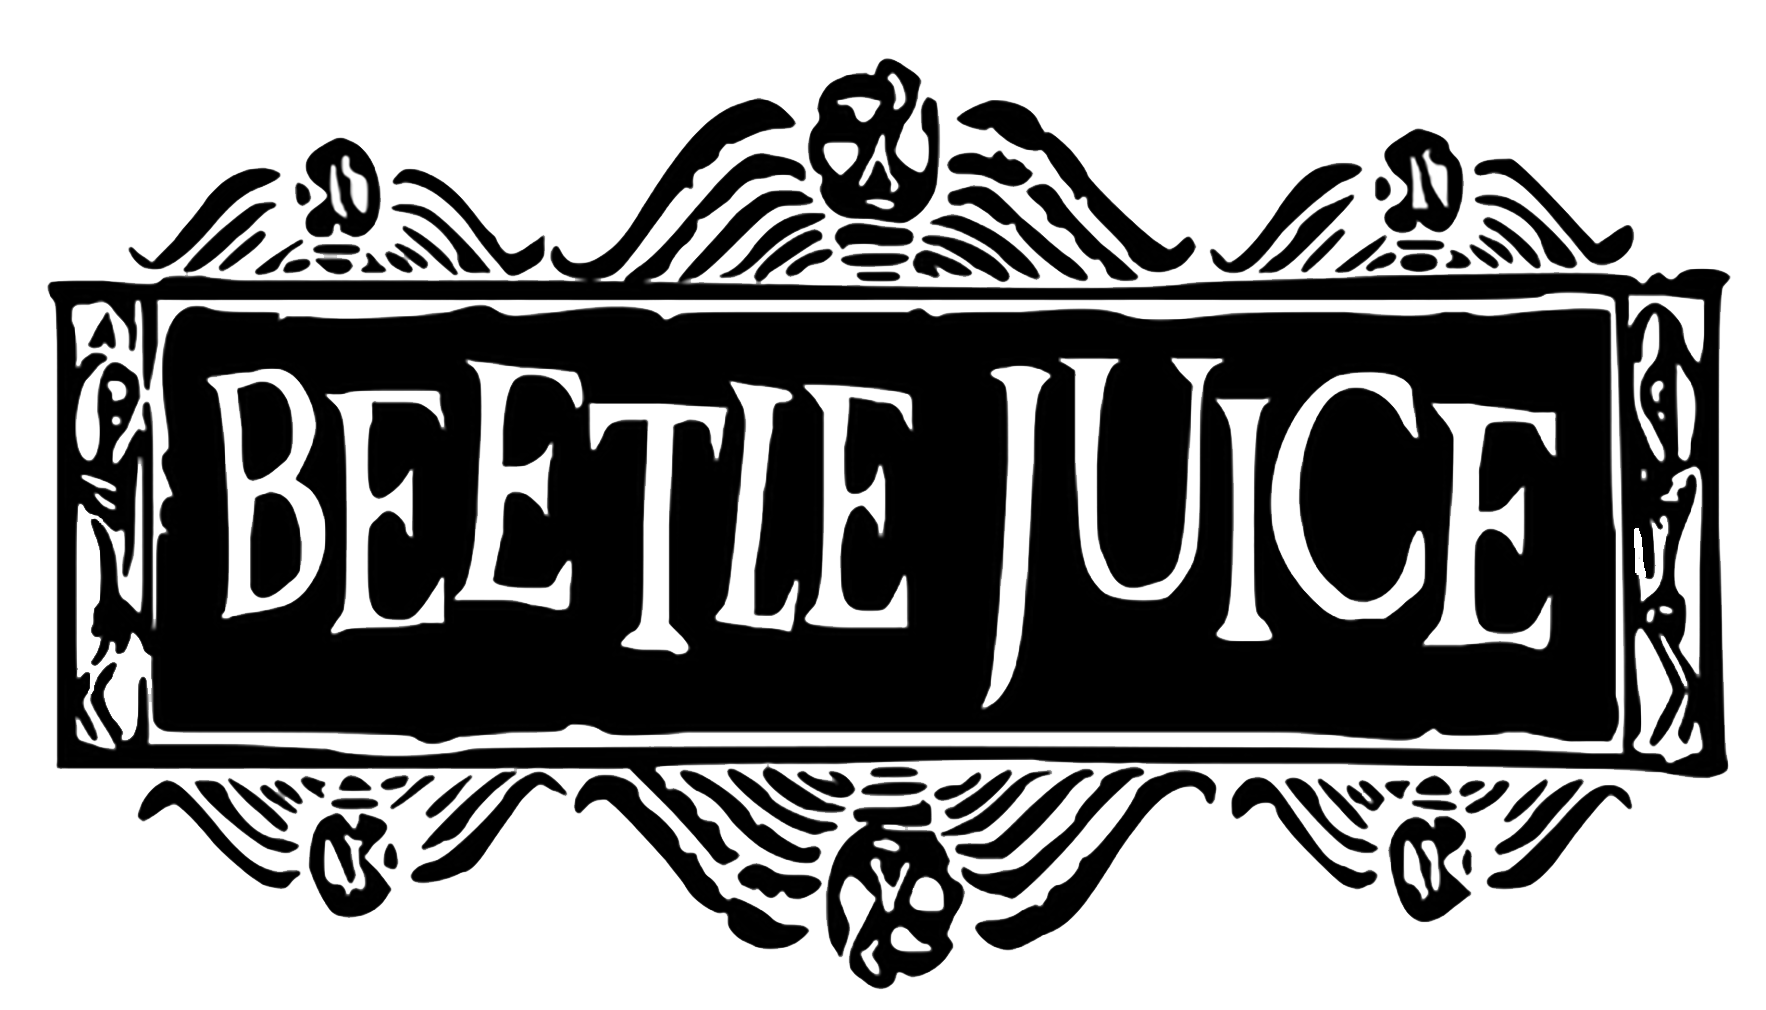 Beetlejuice Logo PNG Image Background